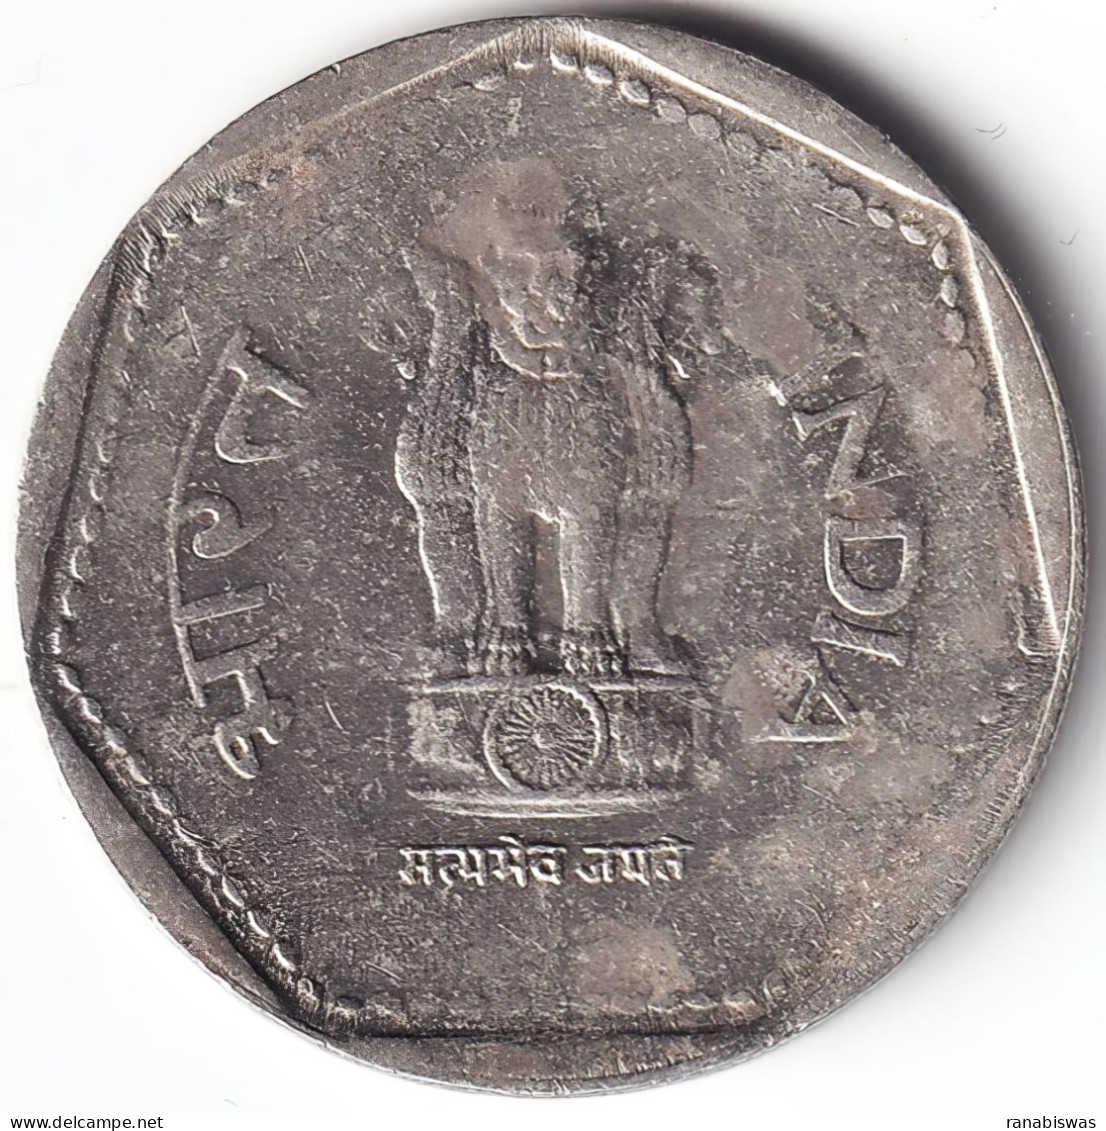 INDIA COIN LOT 107, 1 RUPEE 1989, CALCUTTA MINT, XF - Indien